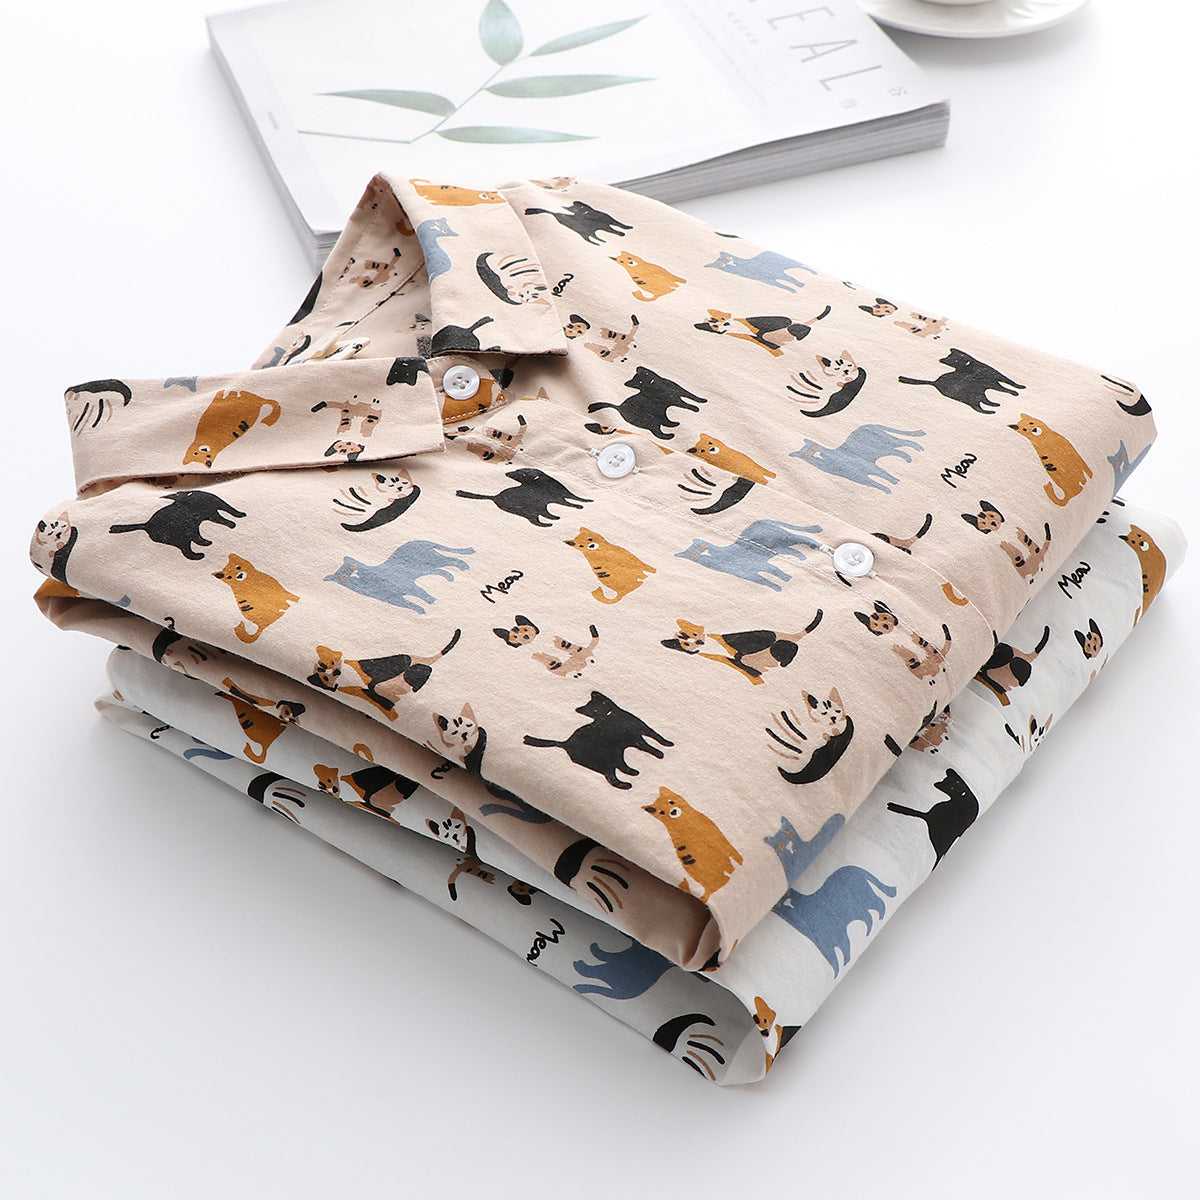 cat pattern blouse for female cartoon cat blouse cat shirt for female